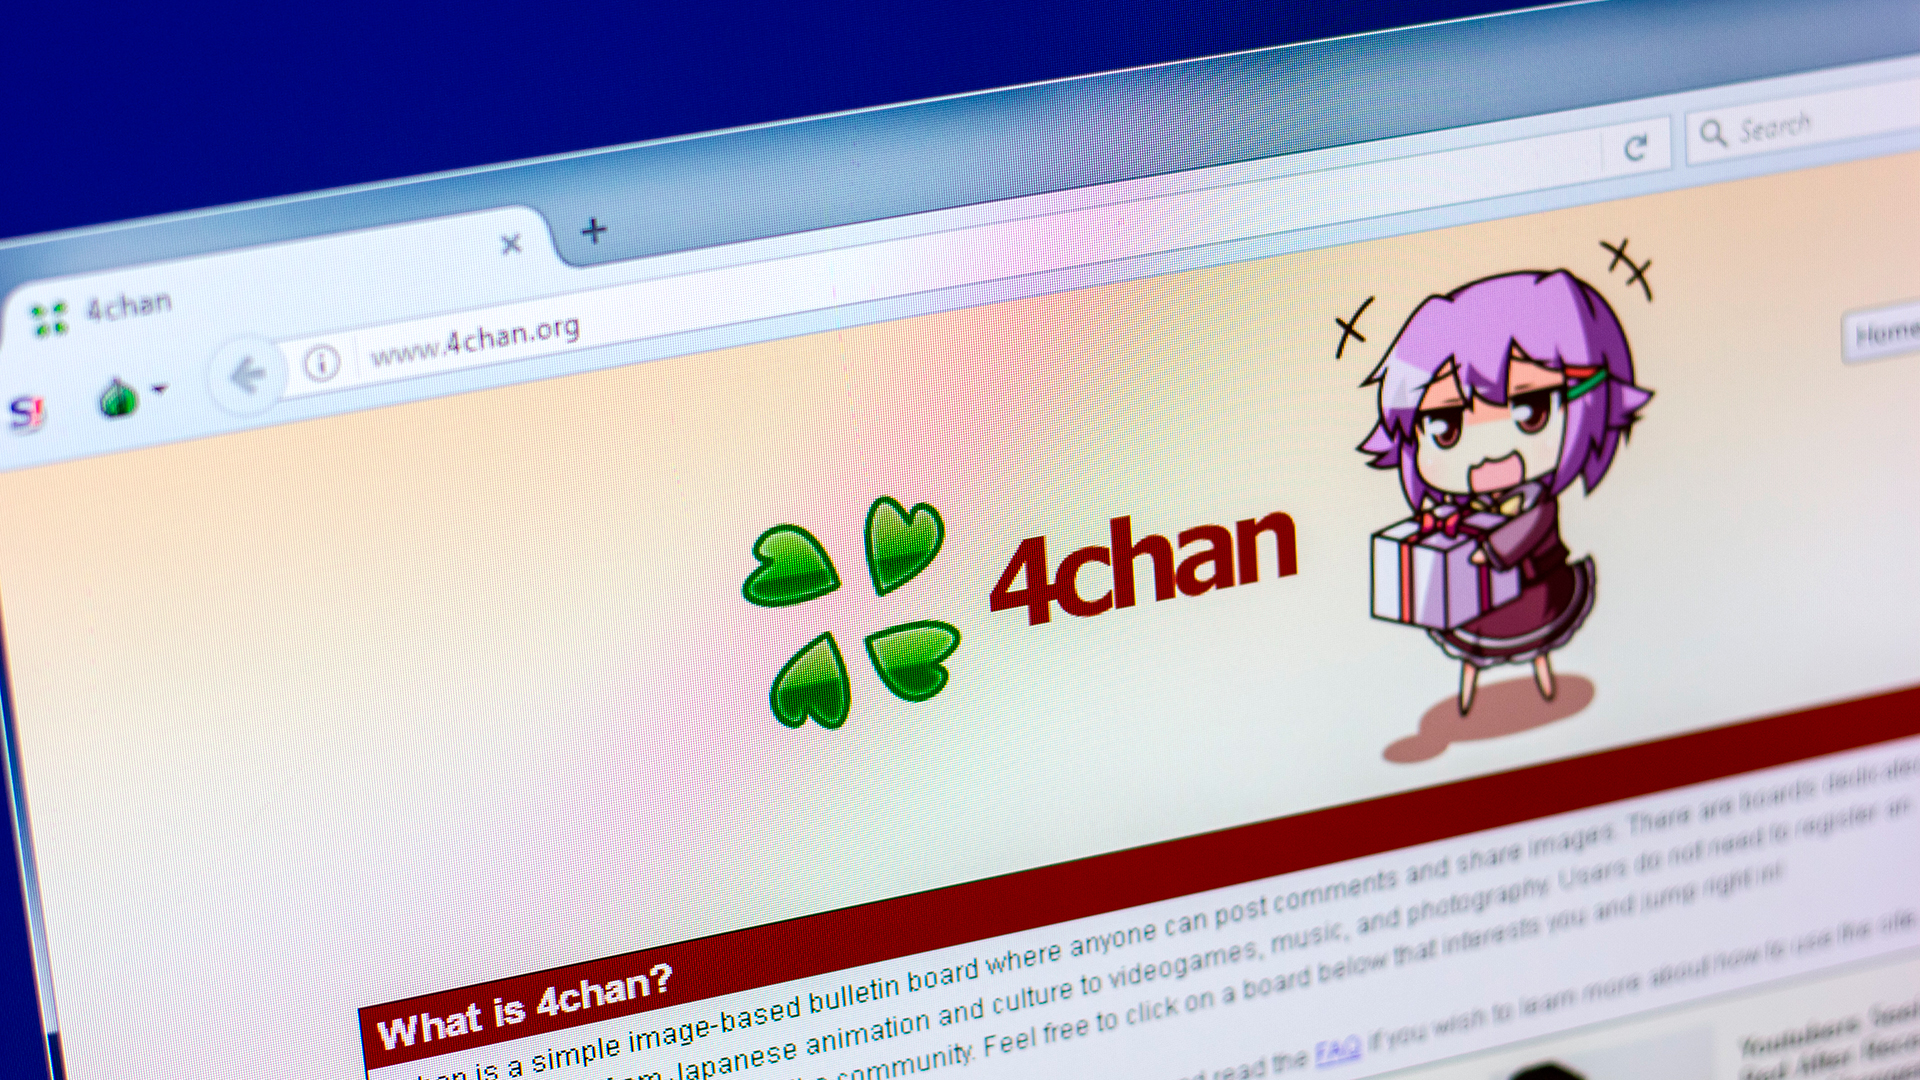 Imagen de la plataforma 4chan (Shutterstock)